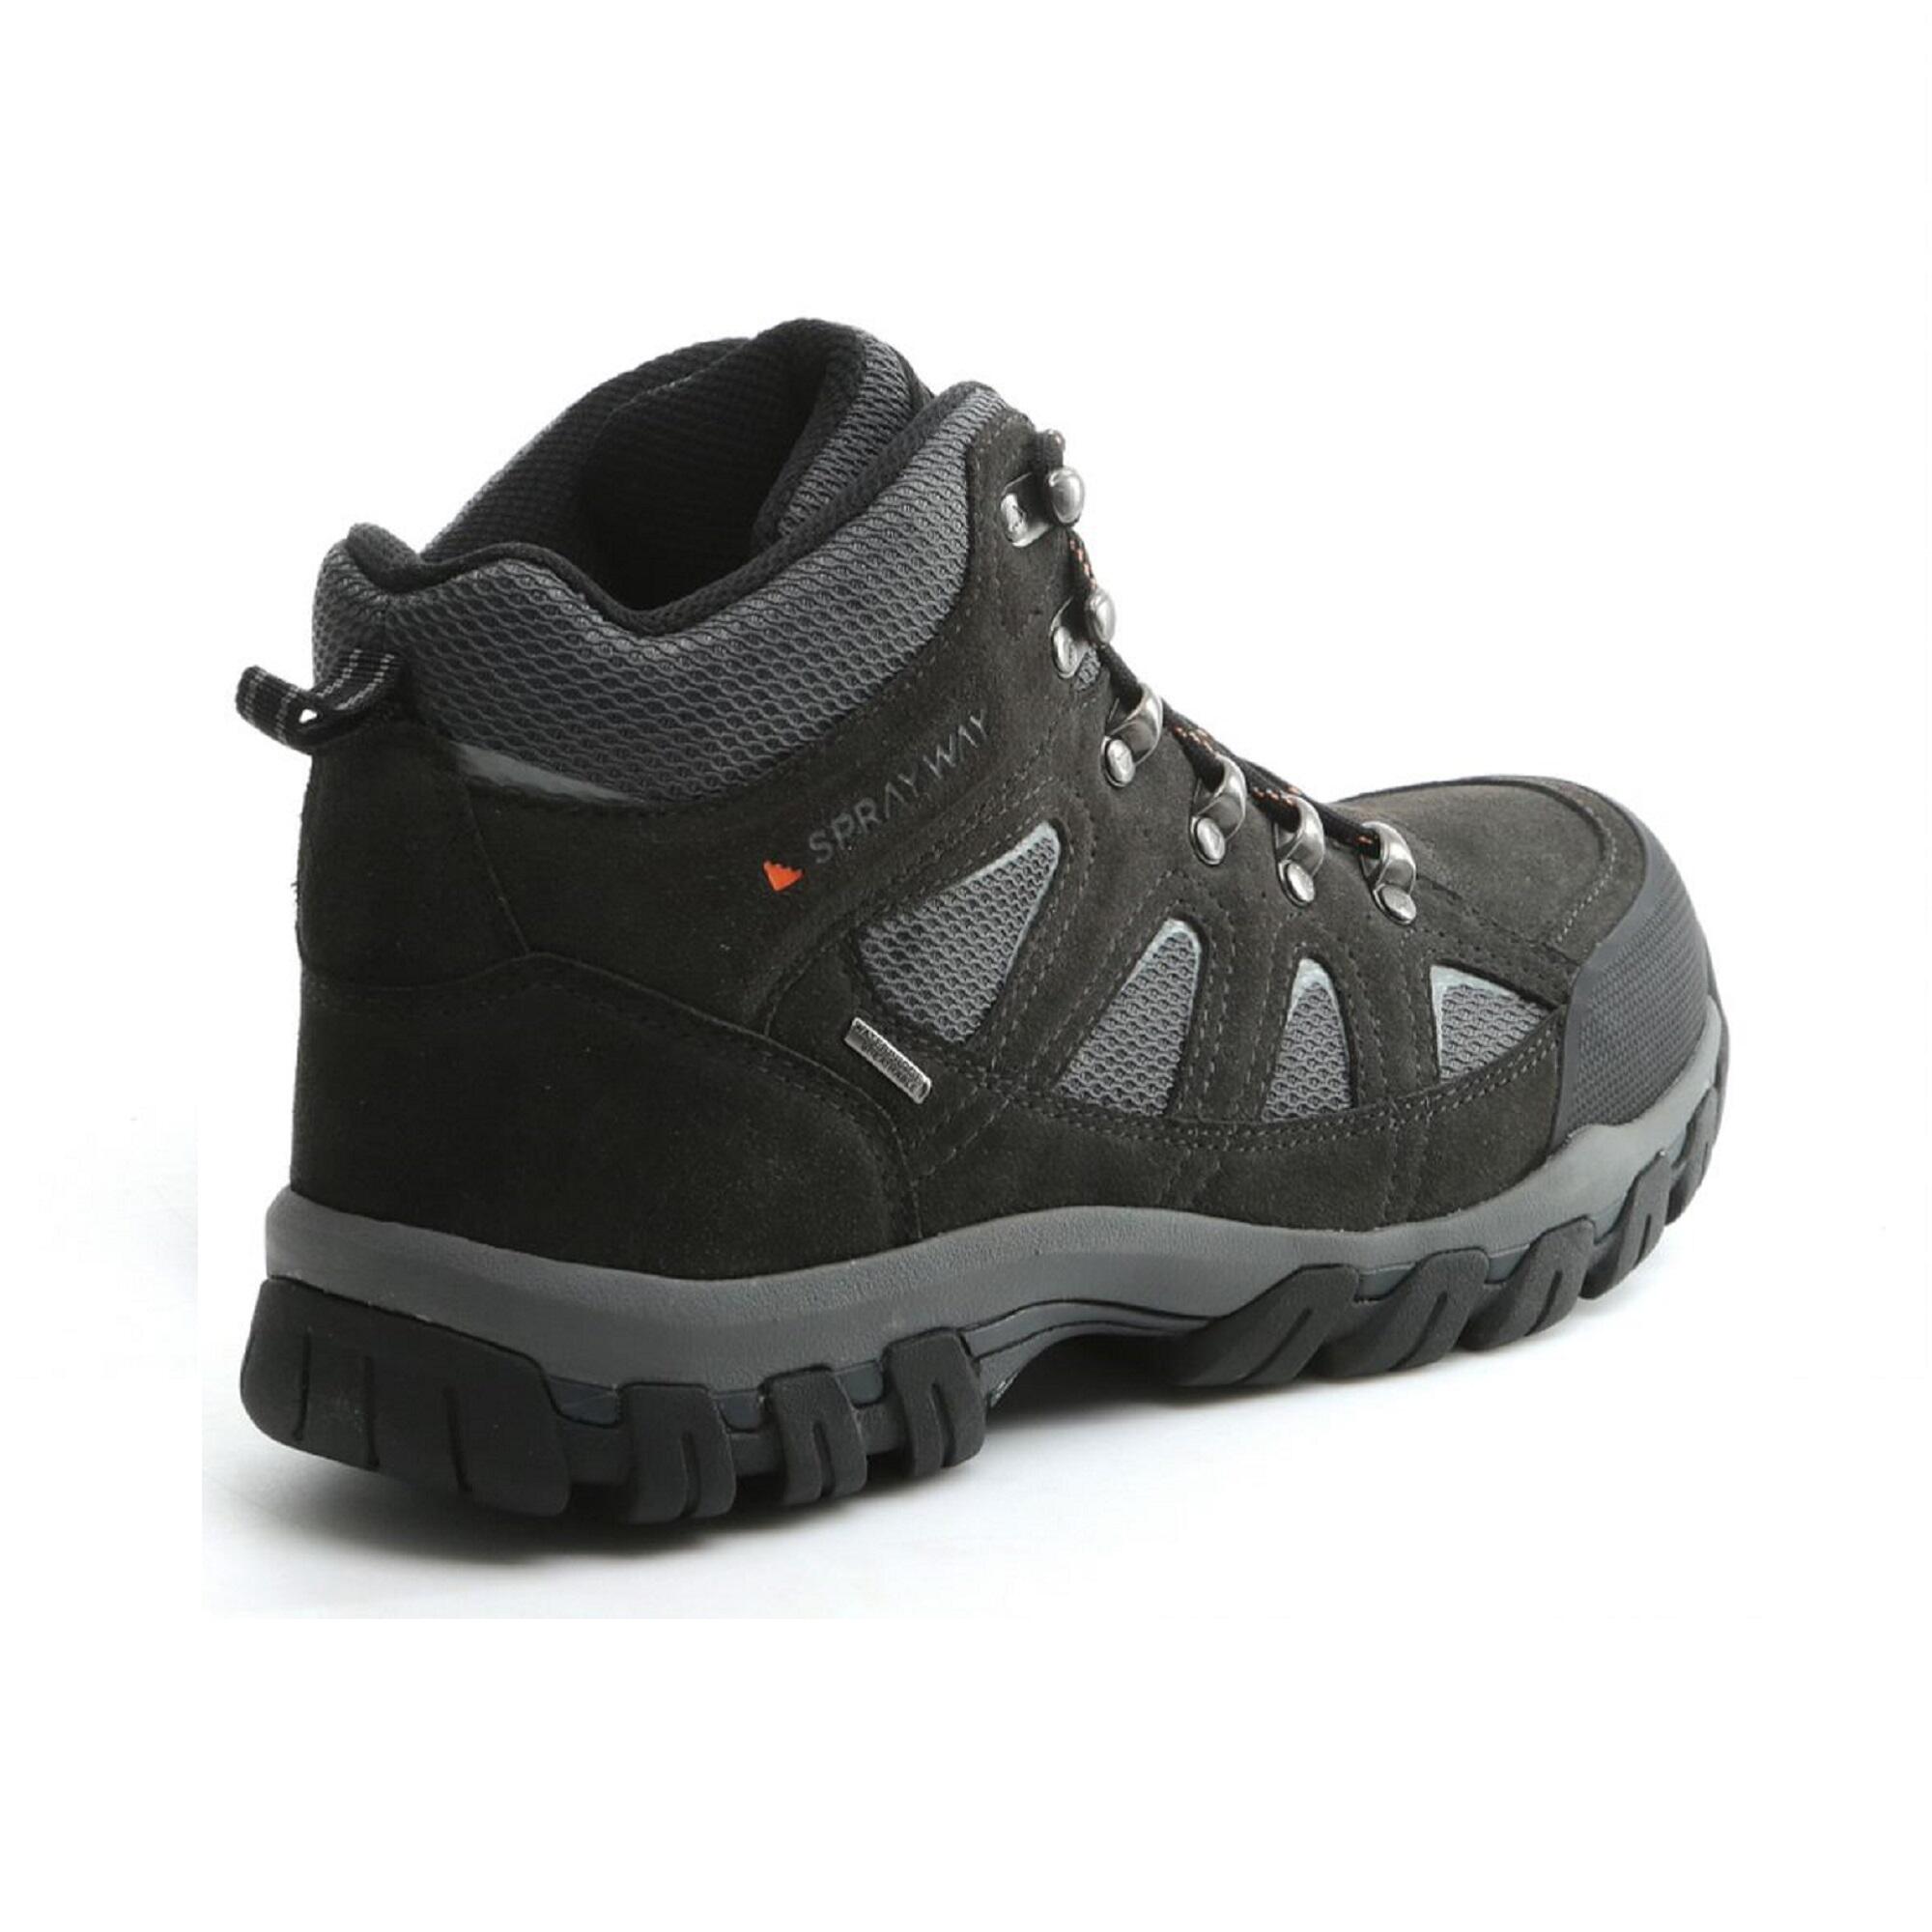 Men's waterproof walking boots - Sprayway Mull mid - Black 3/6